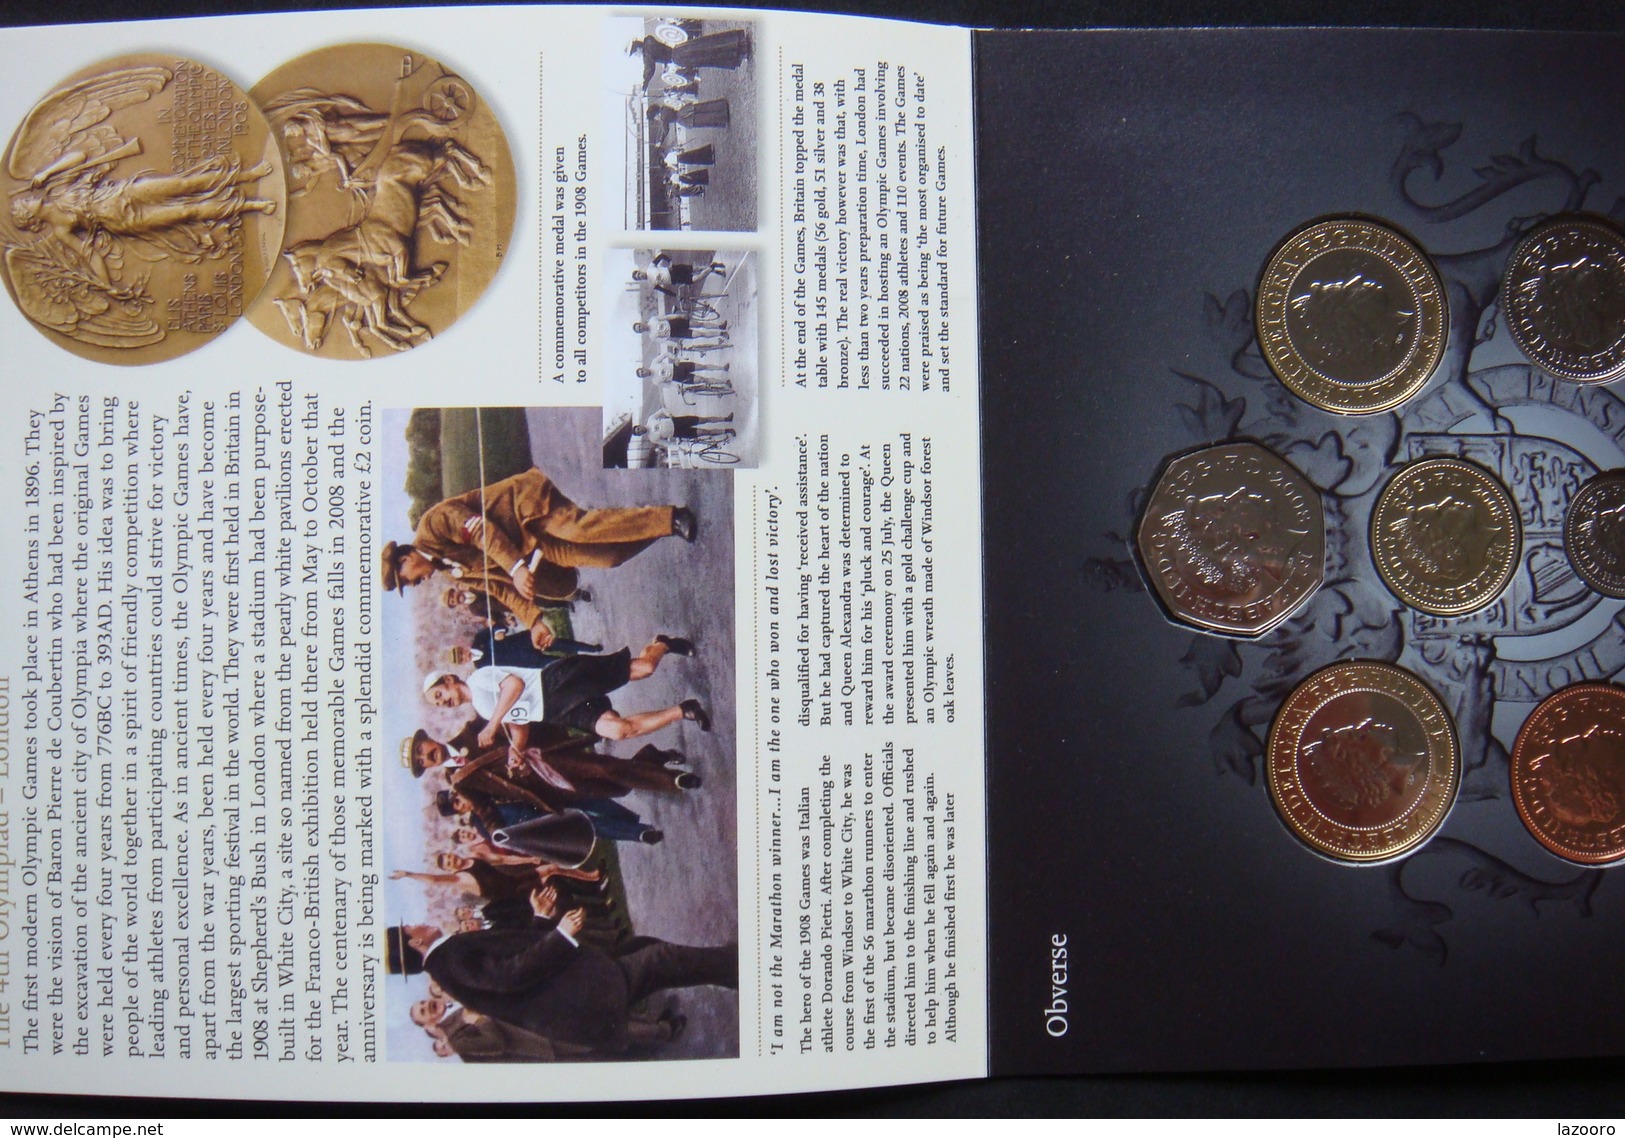 LaZooRo: United Kingdom 2008 UK BUNC Coin Set London Olympics 9 coins